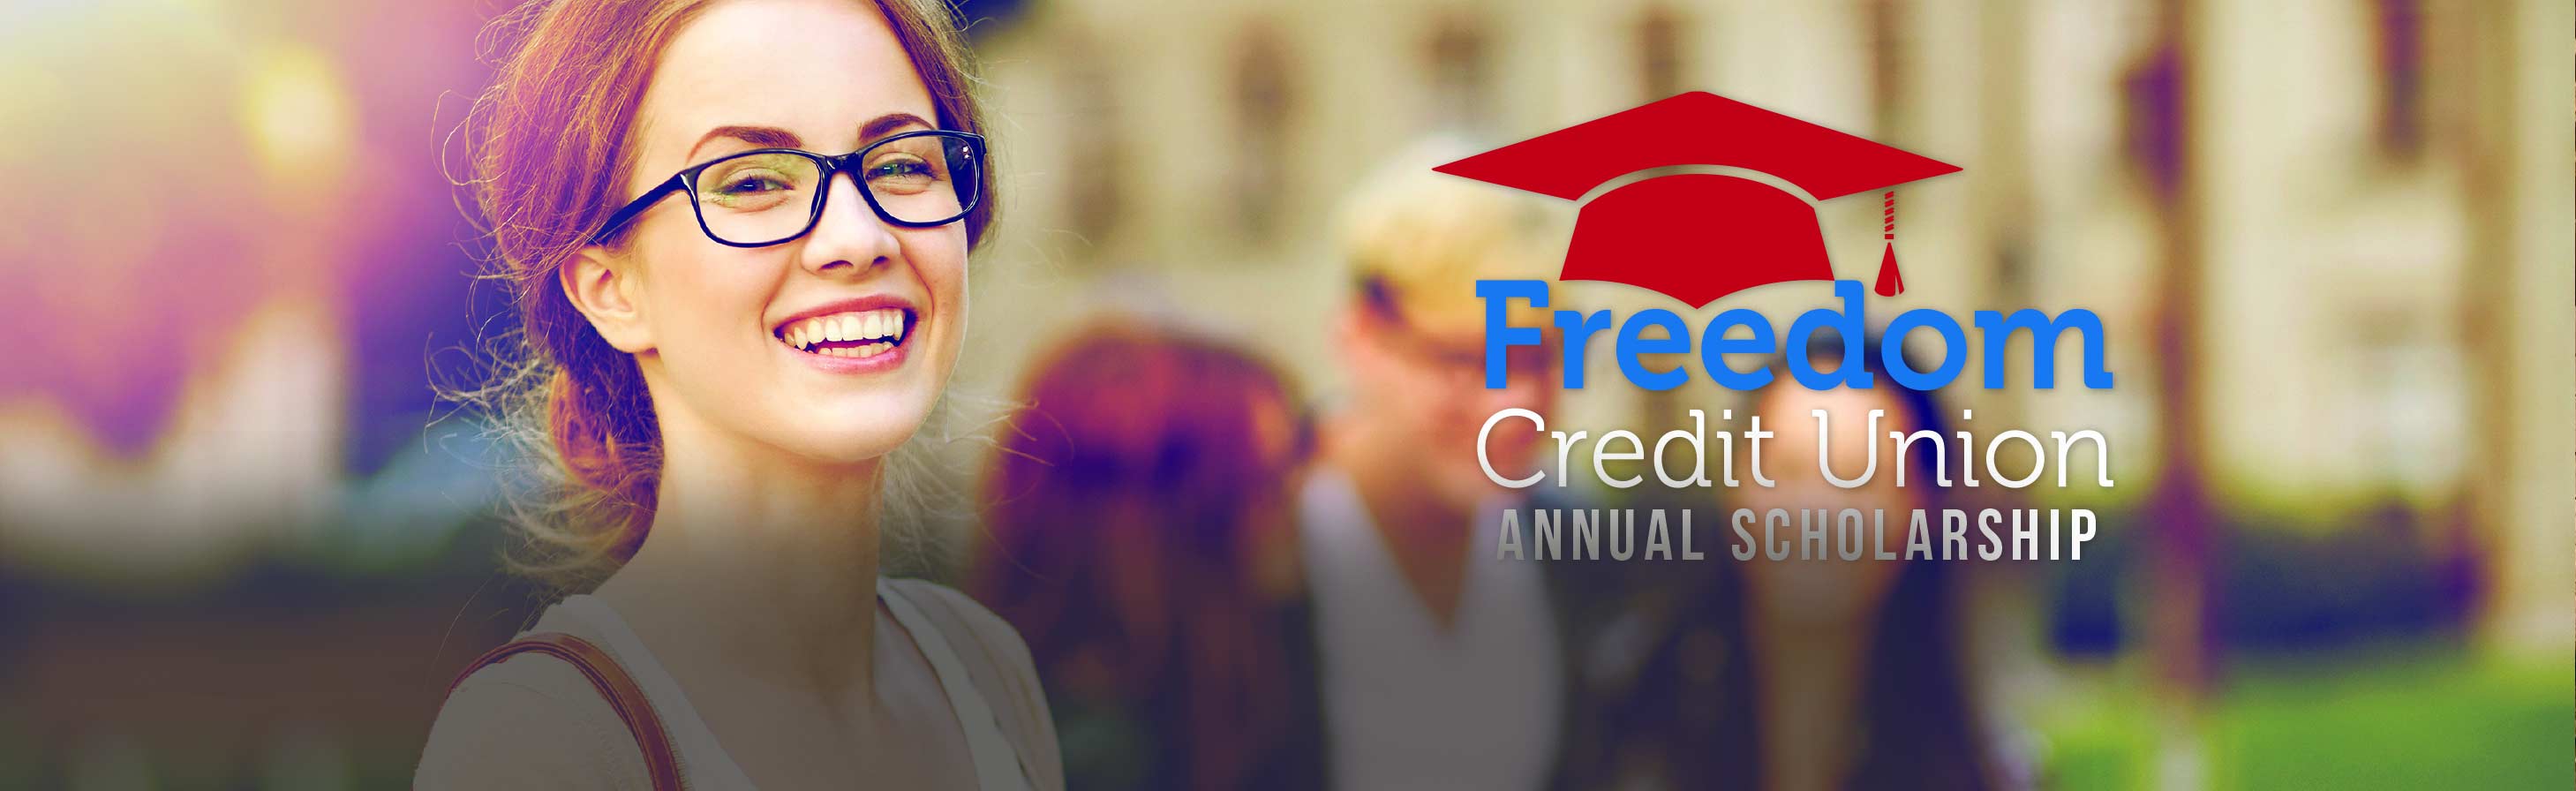 Freedom Credit Union Annual Scholarship